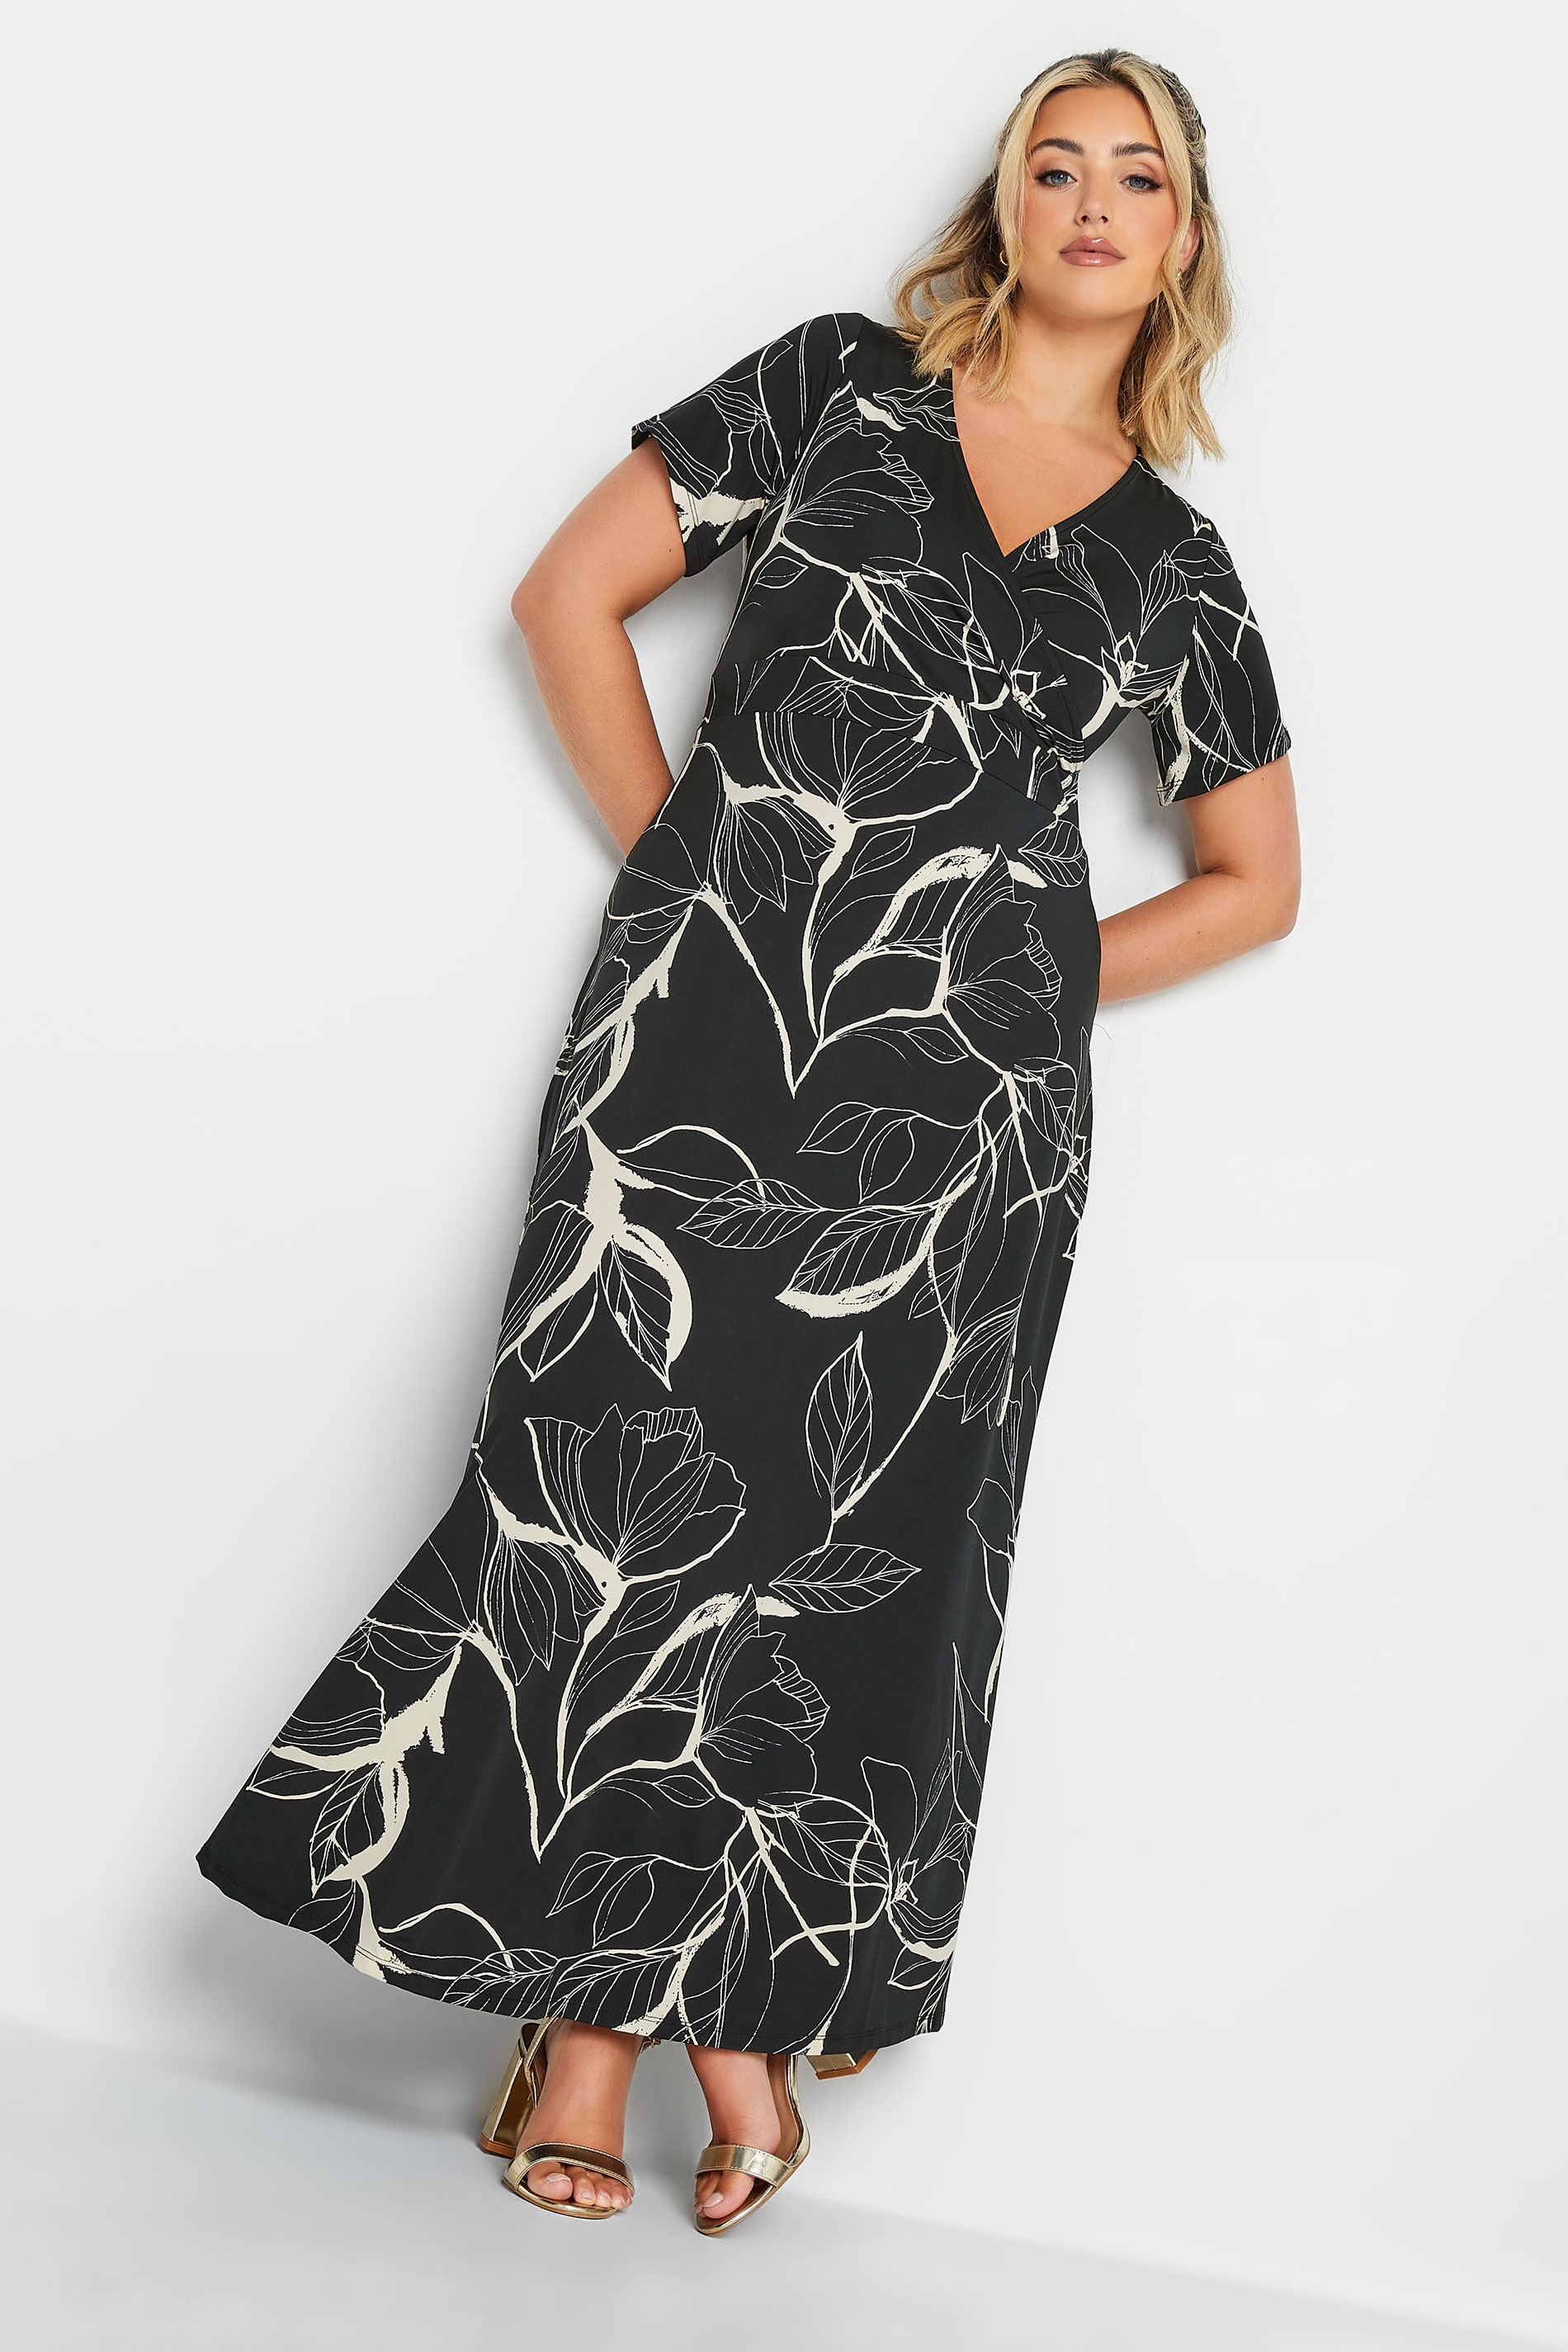 Plus Size Black Floral V-Neck Midaxi Dress | Yours Clothing 2